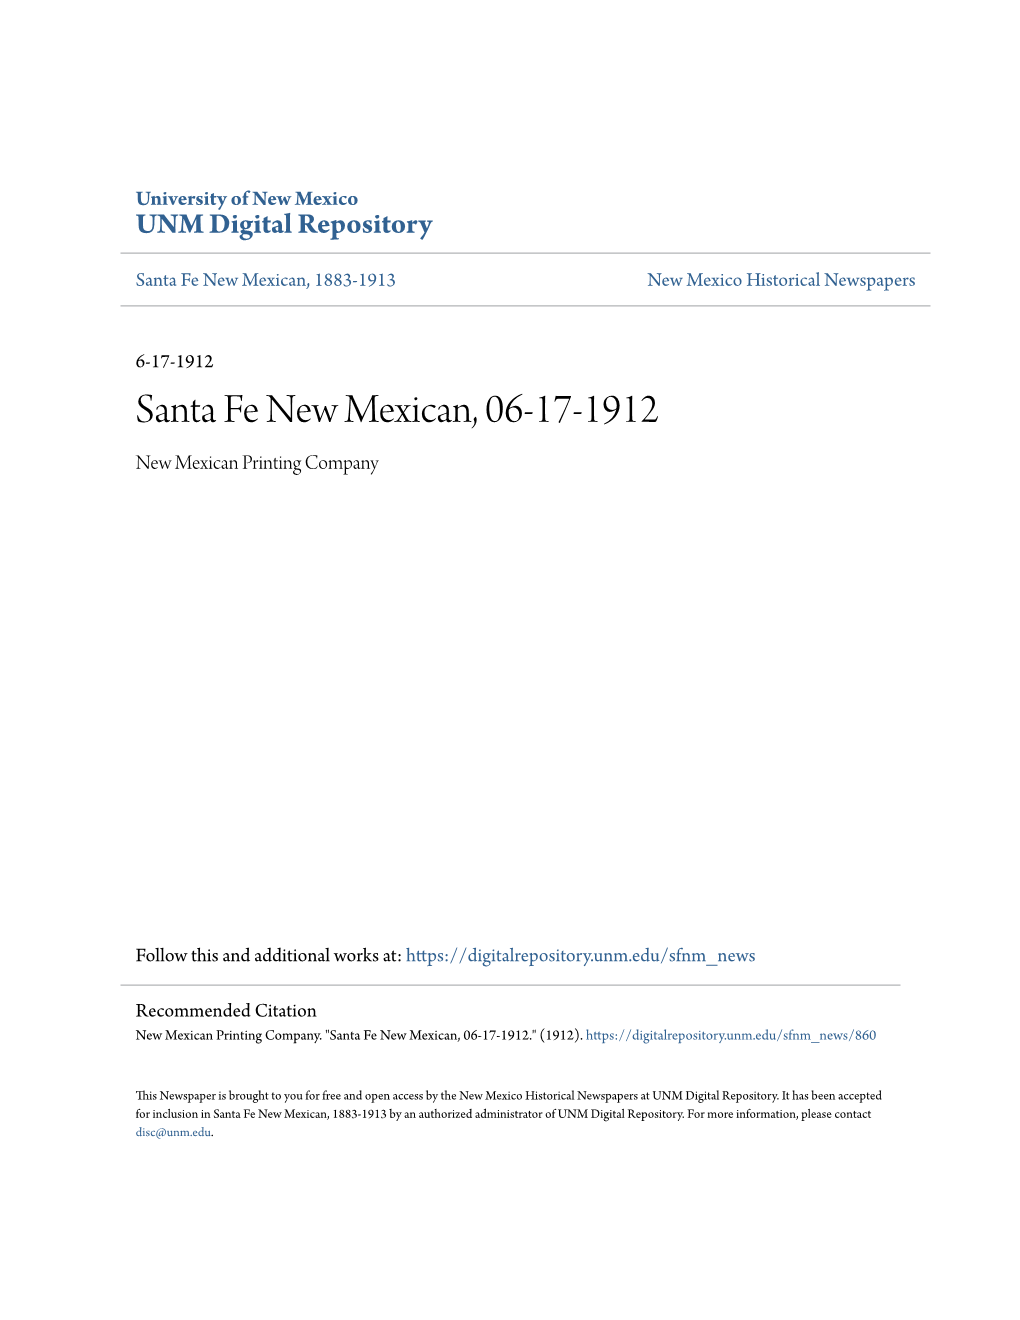 Santa Fe New Mexican, 06-17-1912 New Mexican Printing Company